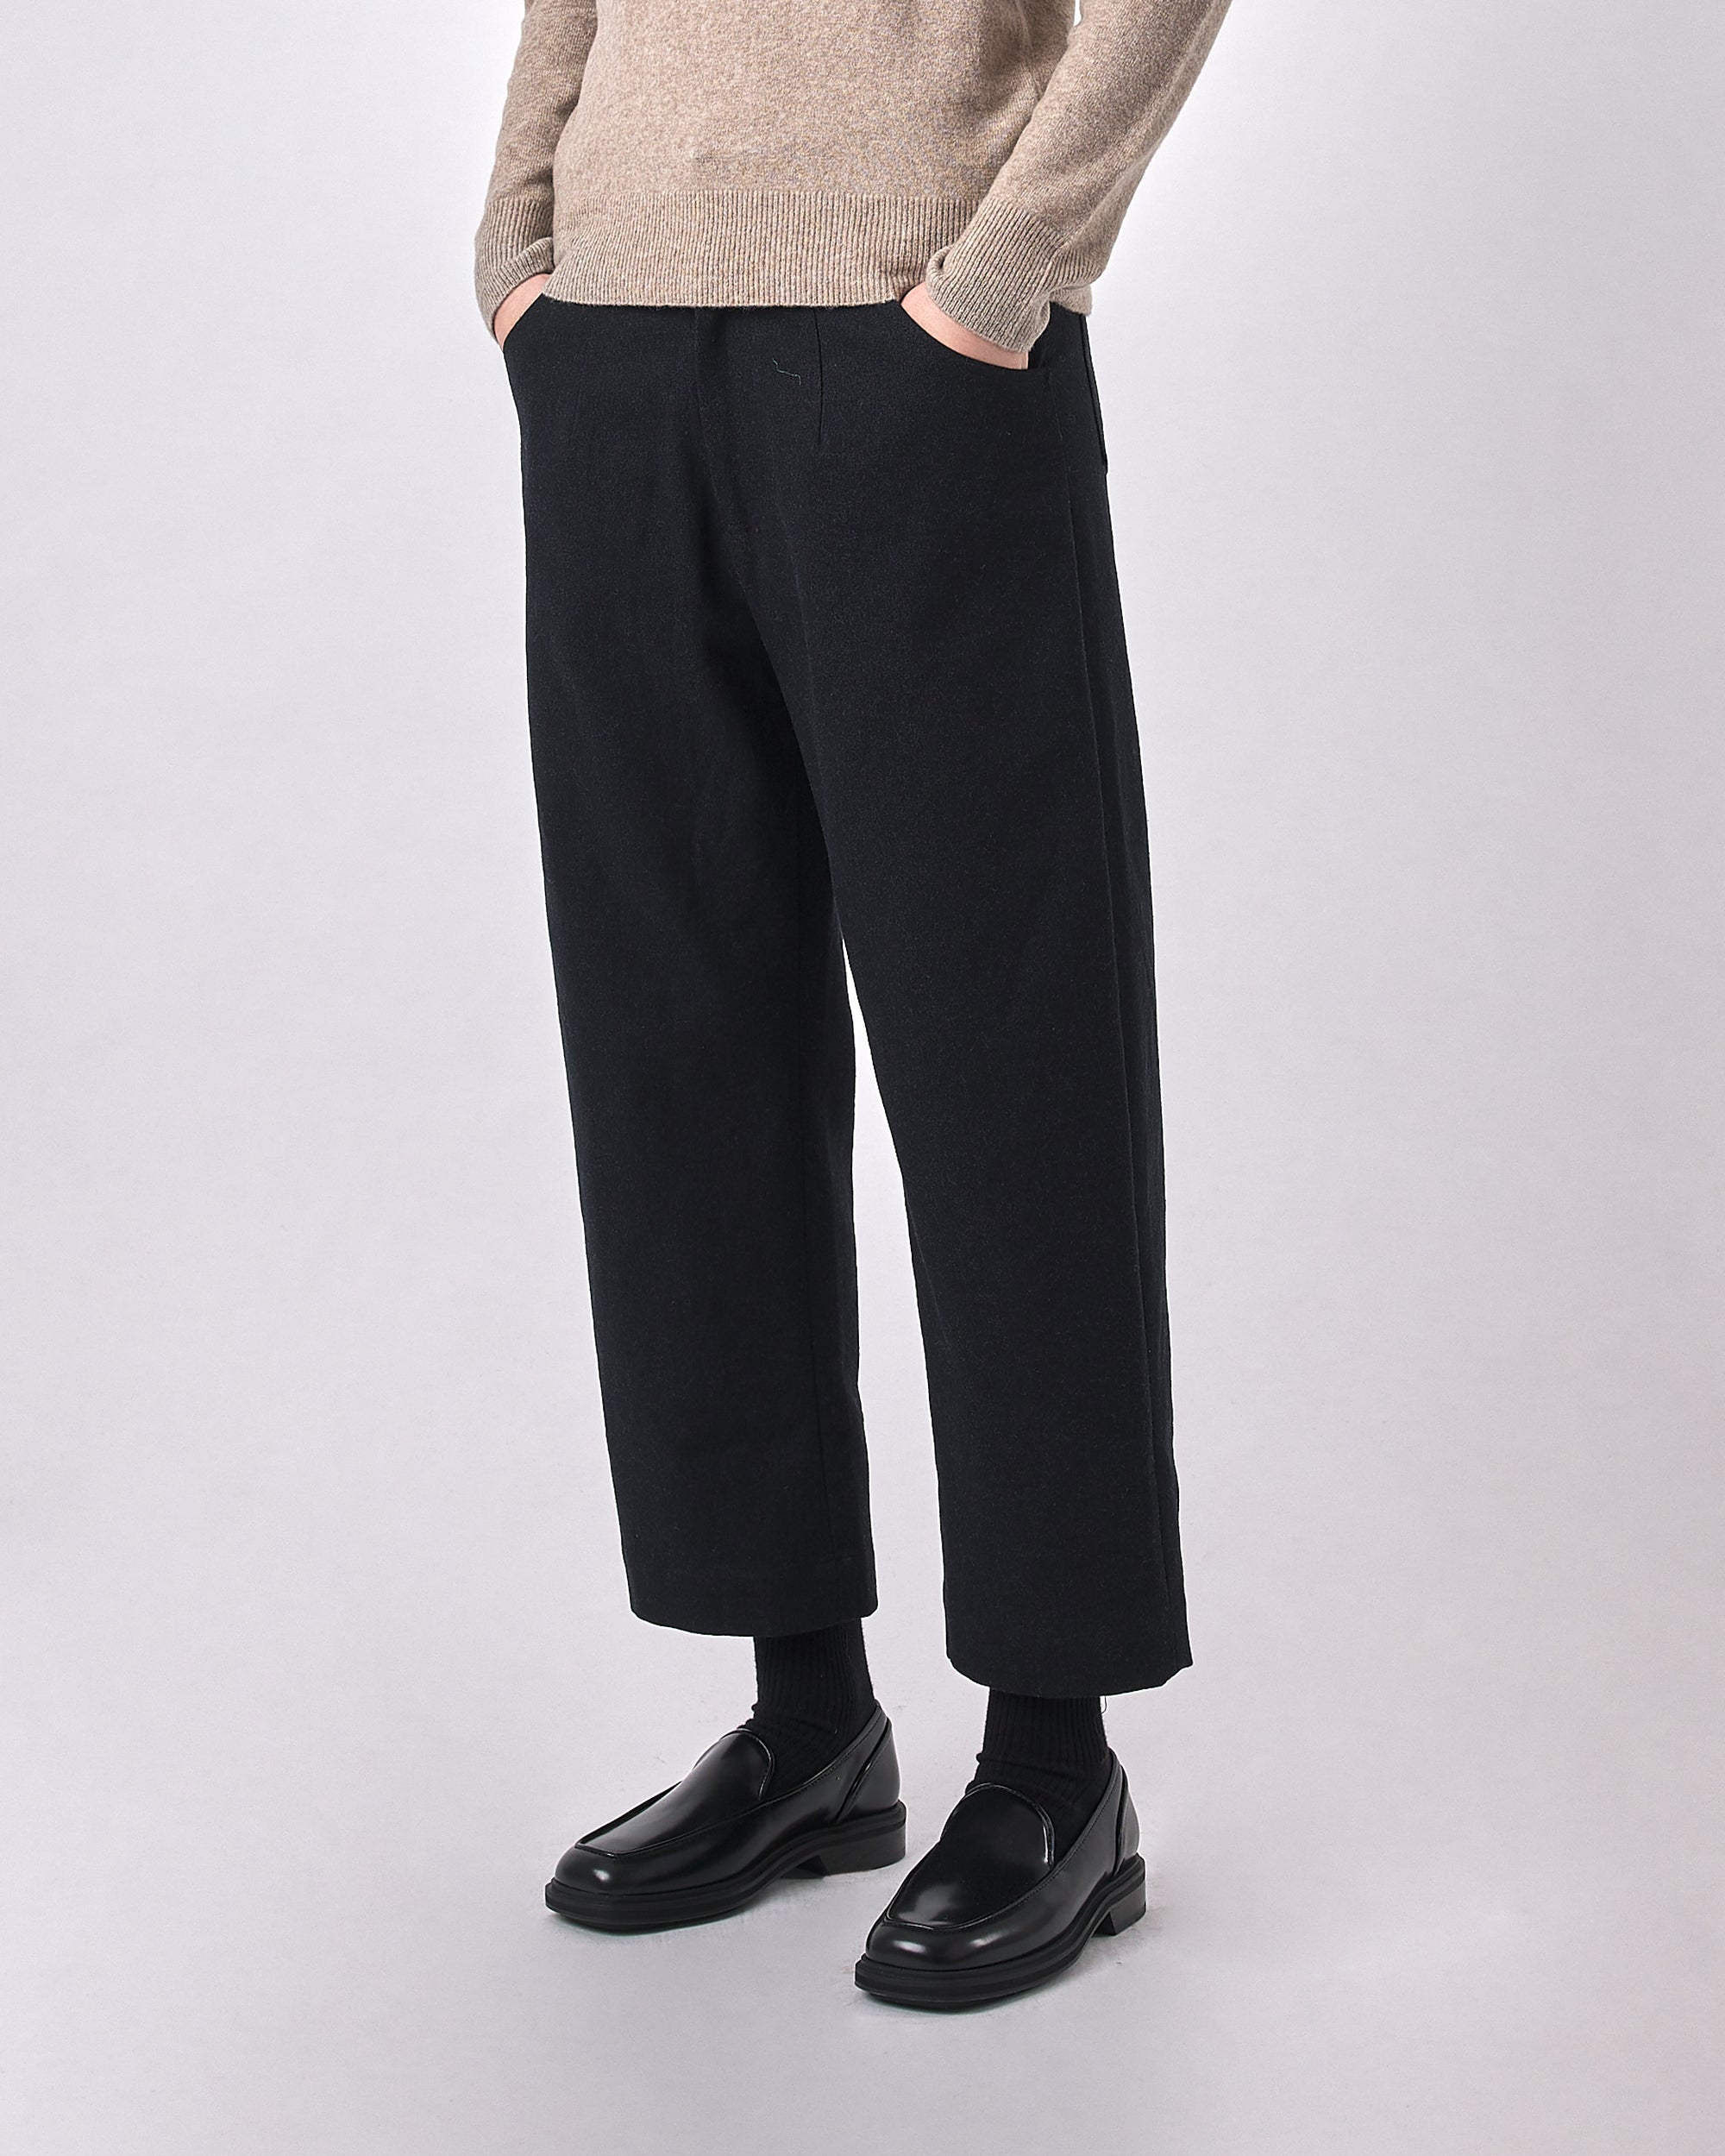 Signature Curve Legged Trouser - Fall Edition - Navy Black